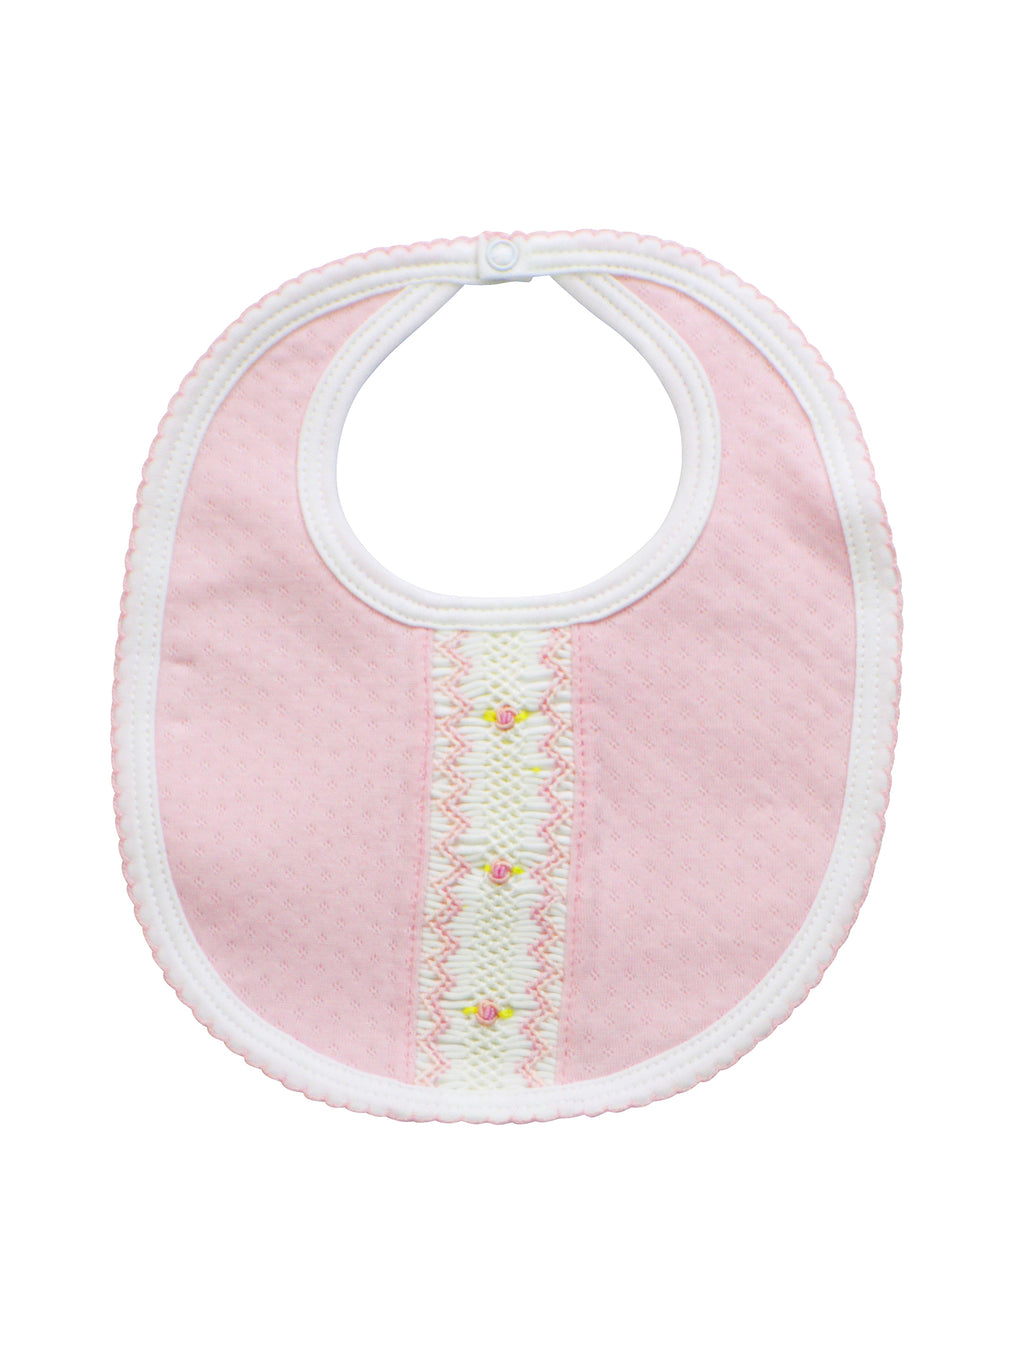 Baby Girl's Pink Jacquard Hand Smocked Bib - Little Threads Inc. Children's Clothing